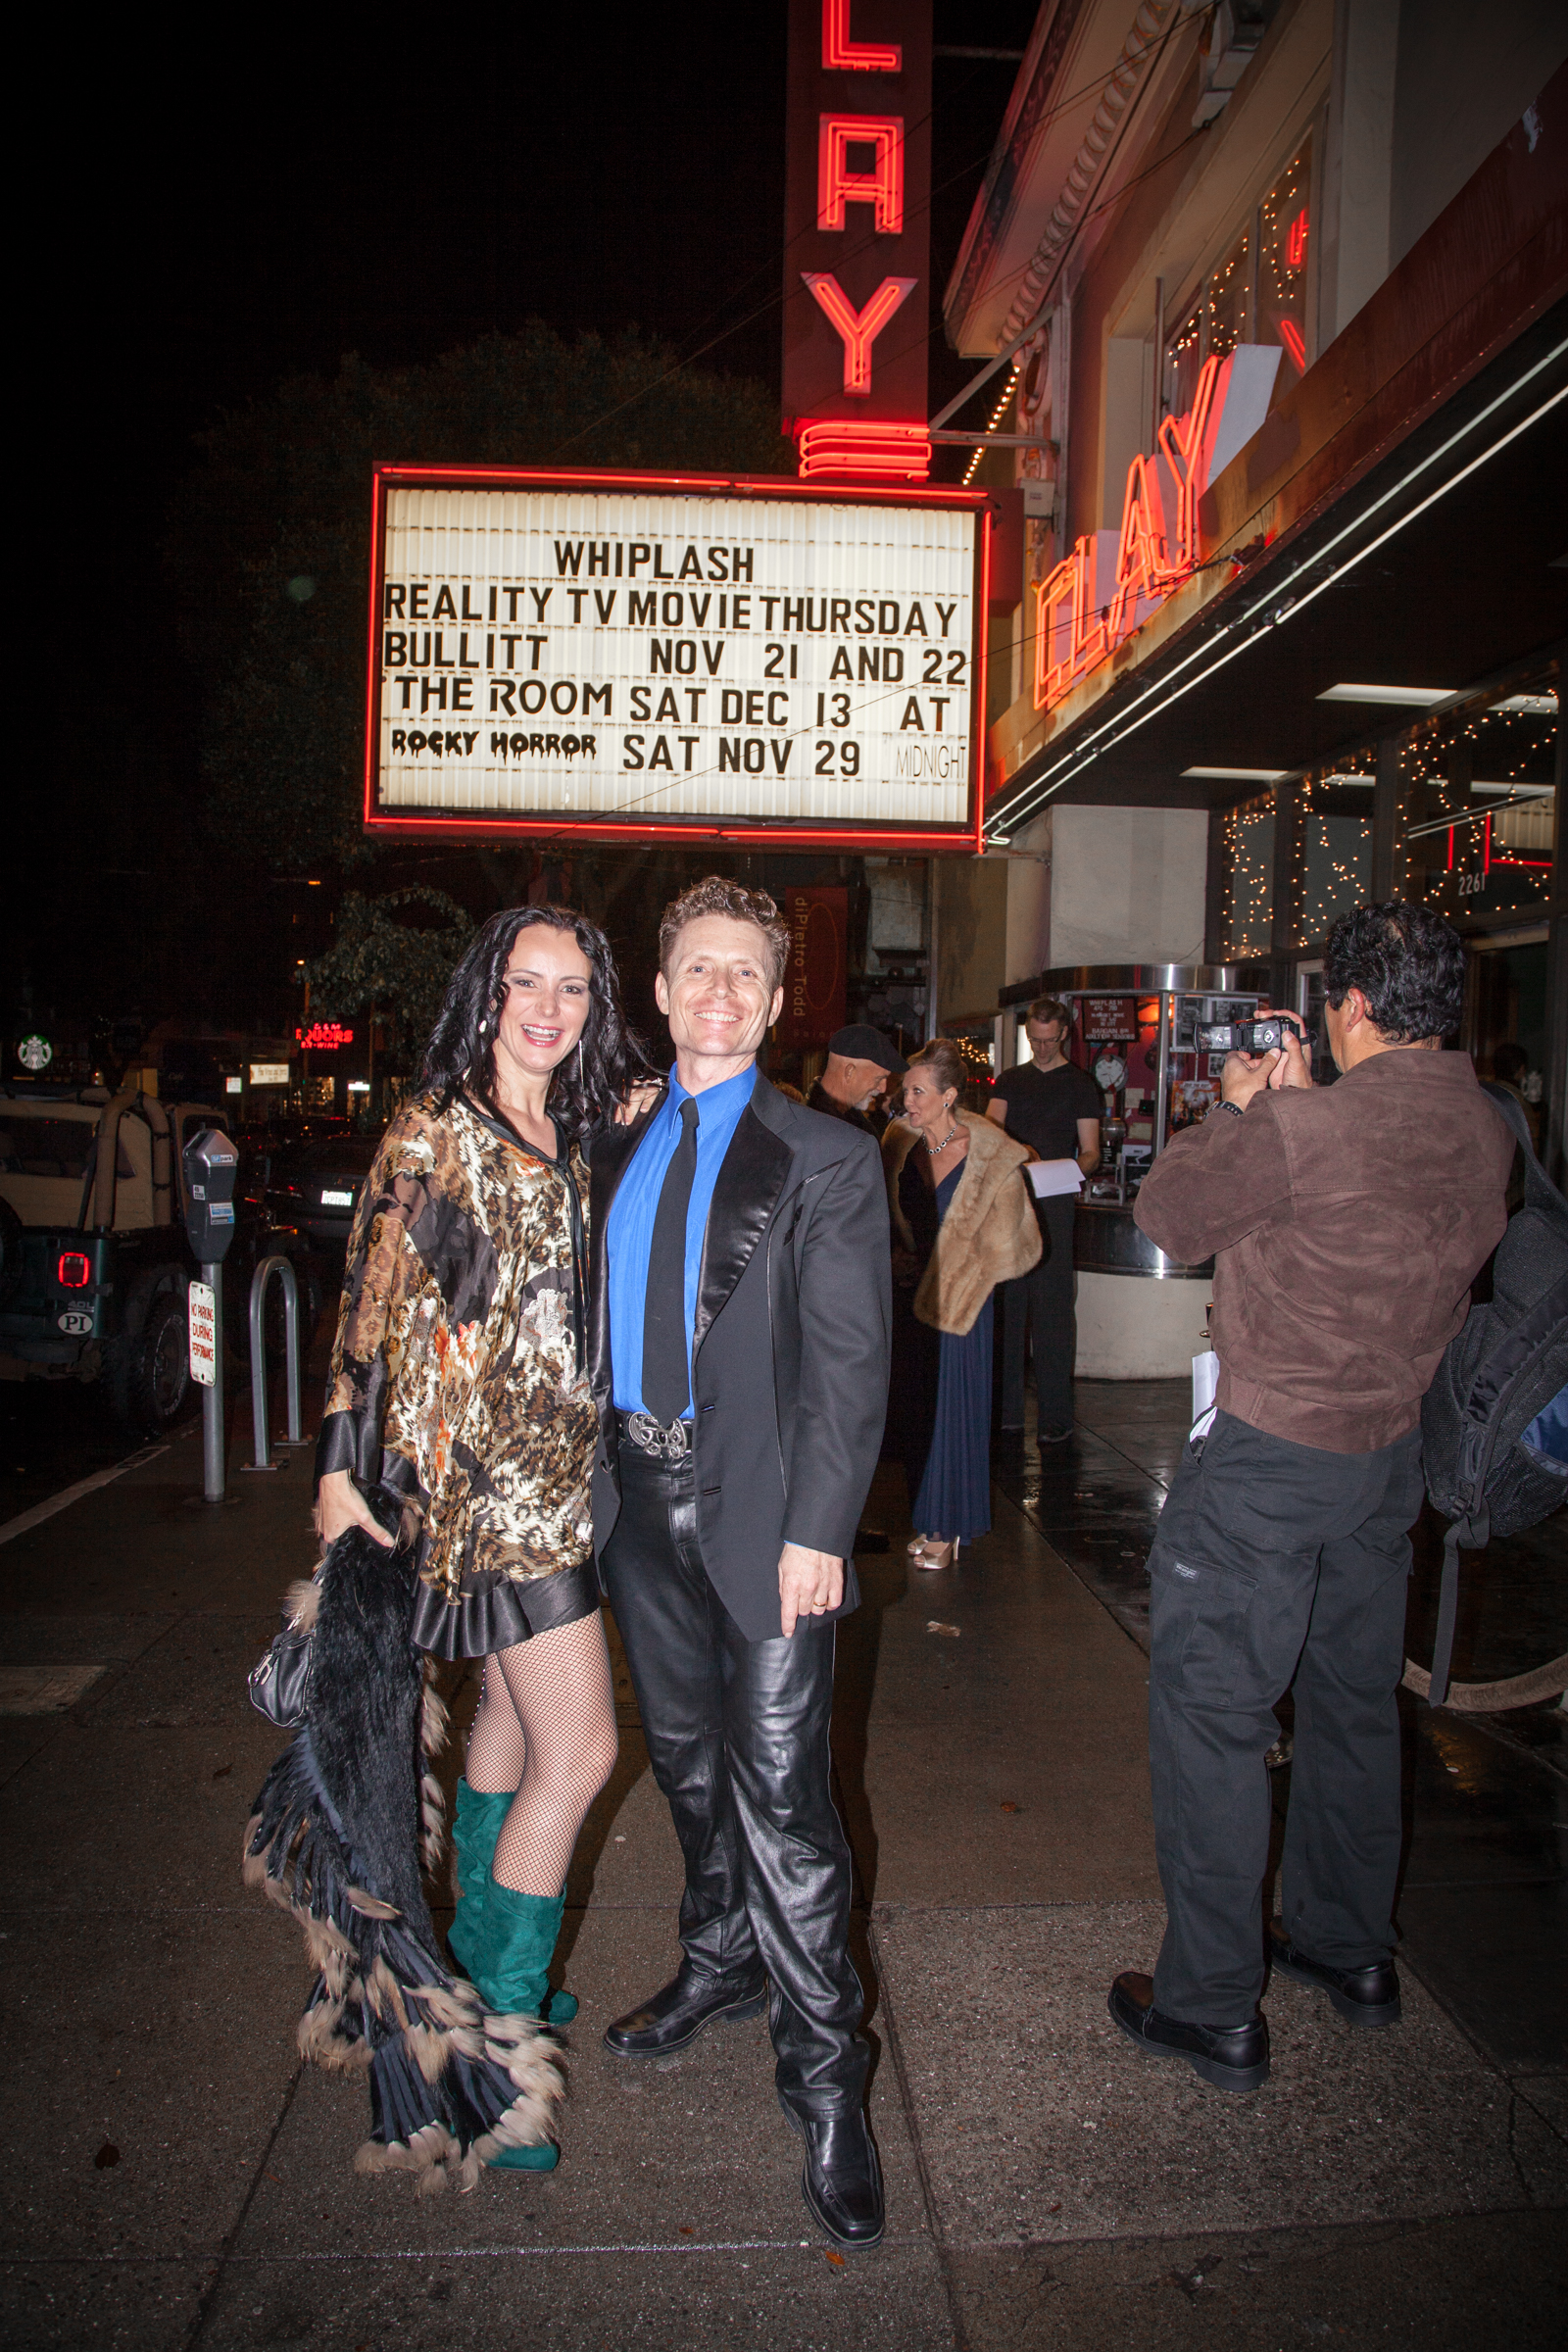 Joanna Siekierska and Tytus Bergstrom at the San Francisco Reality TV Movie Premiere - Nov 20, 2014